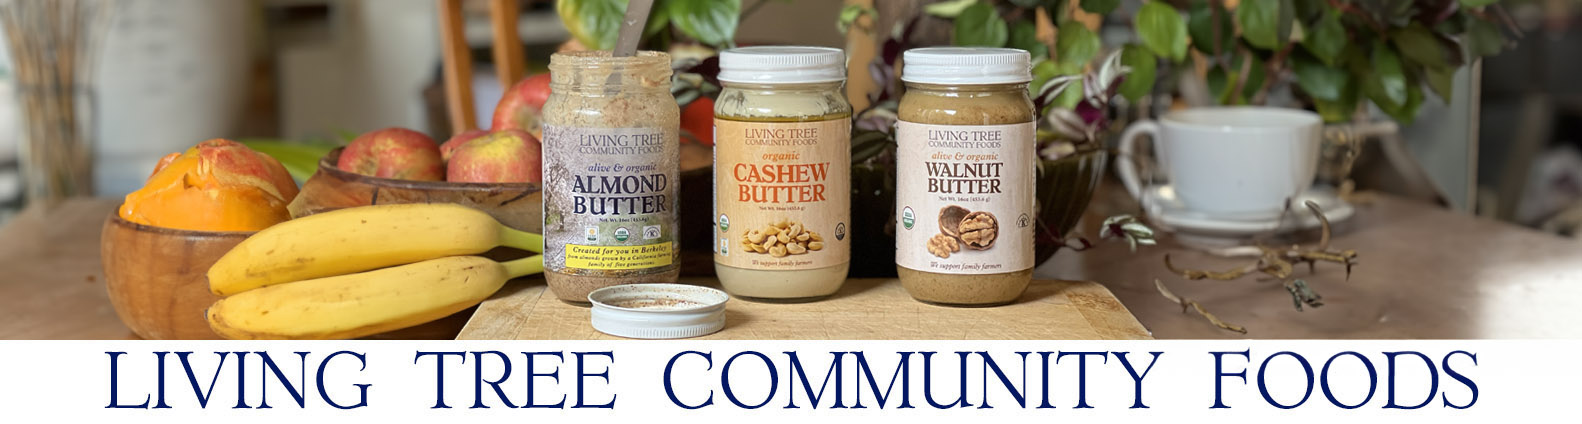 Nut Butter Newsletter Header